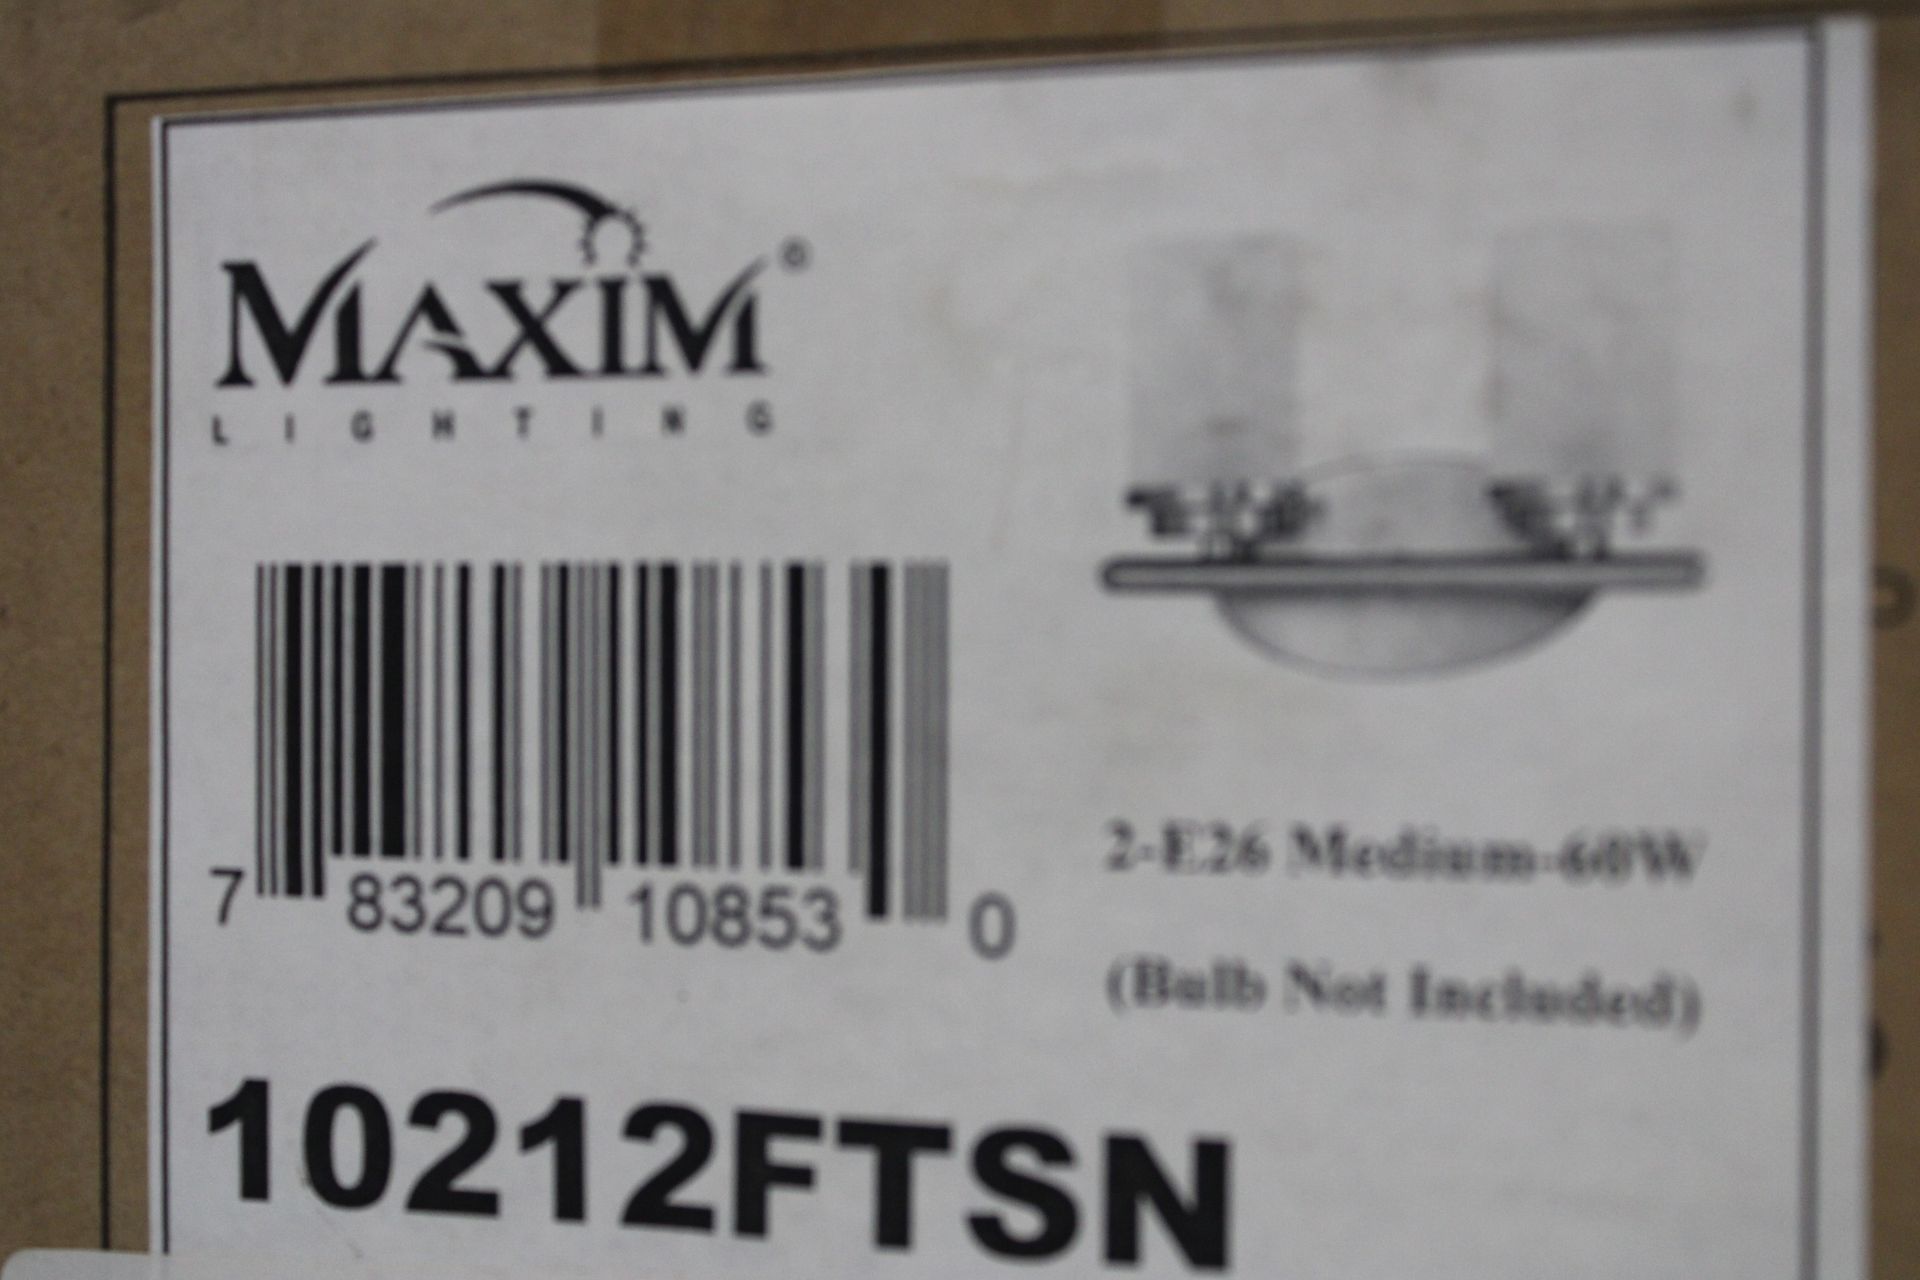 7x Maxim Lighting 10212FTSN Incandescent Lighting EA